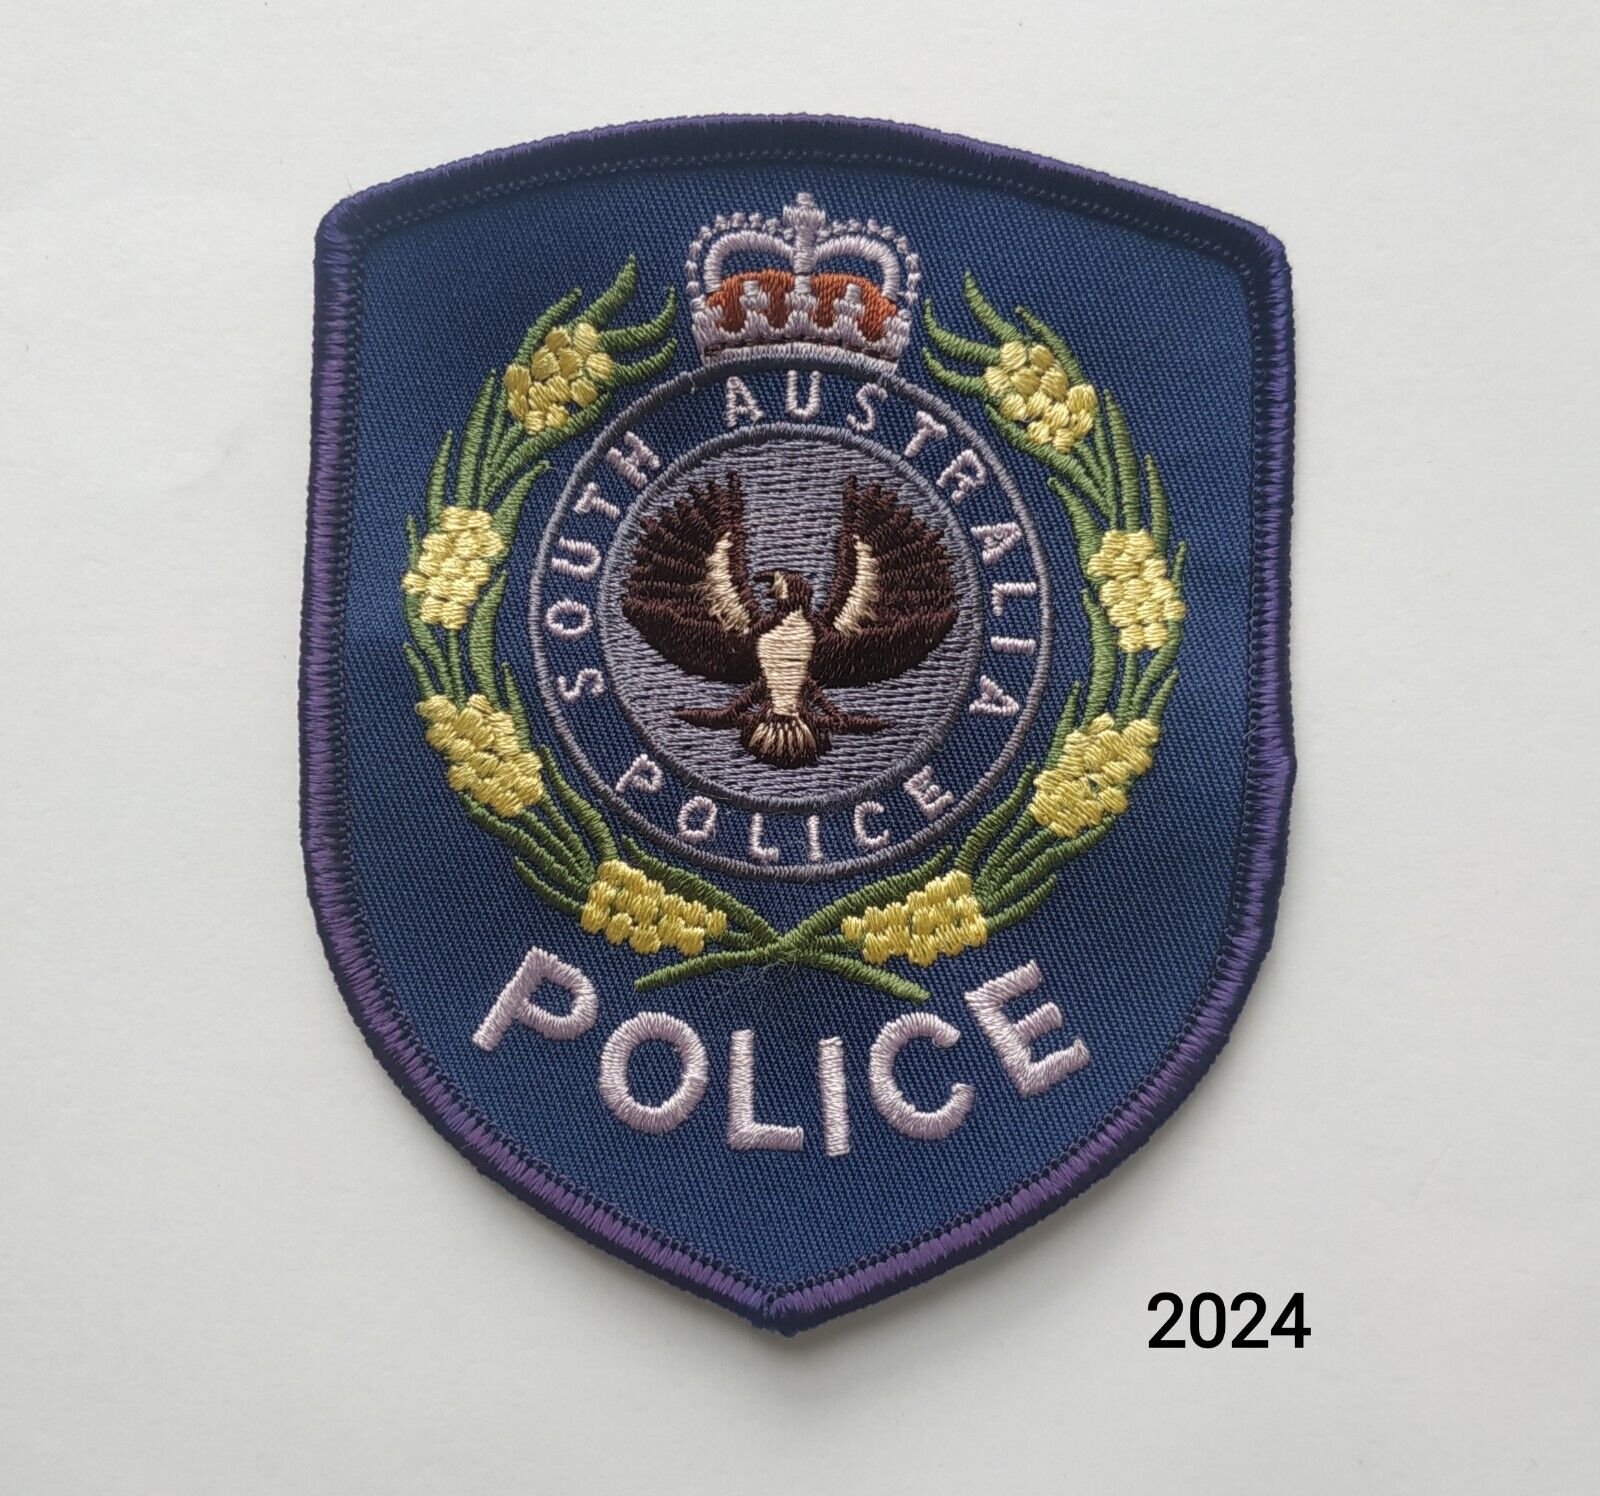 South Australia Australian SA Police Subdued patch. New